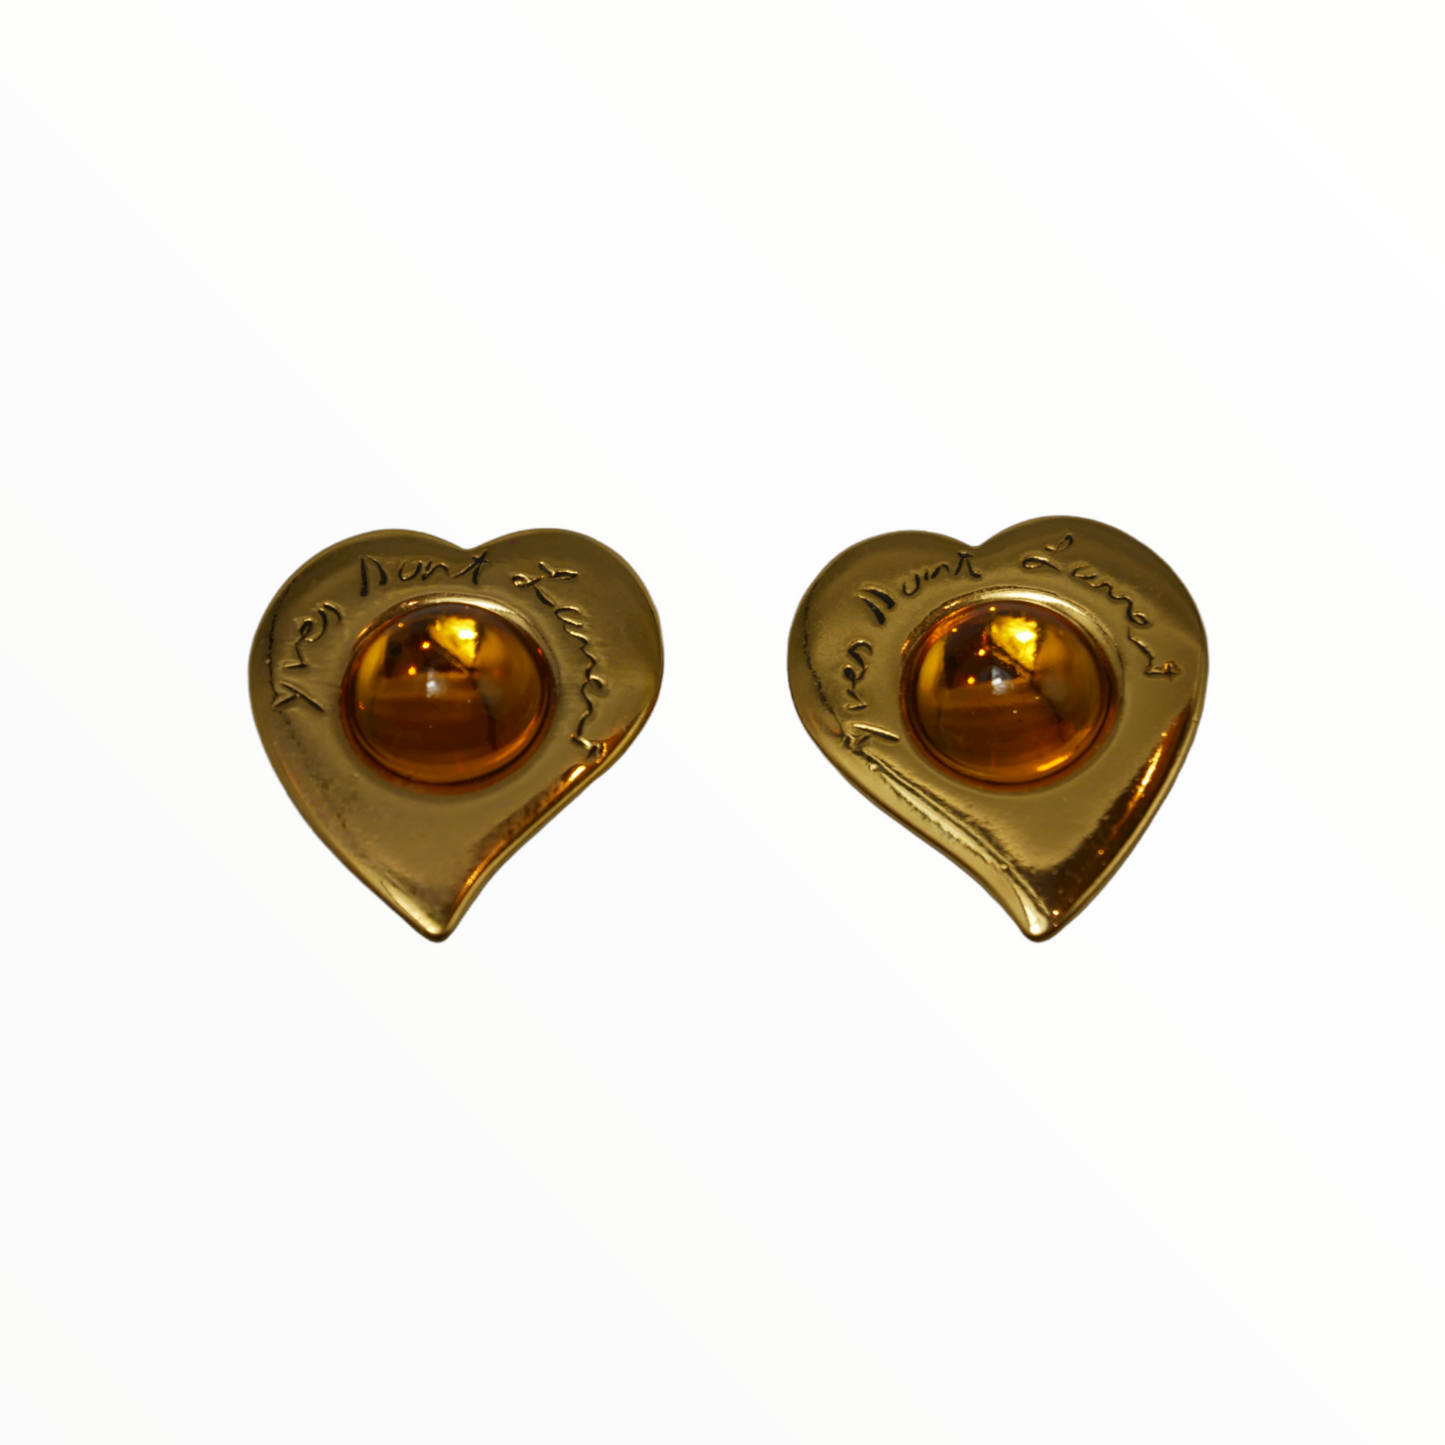 Yves Saint Laurent vintage heart-shaped orange earclips - 1990s